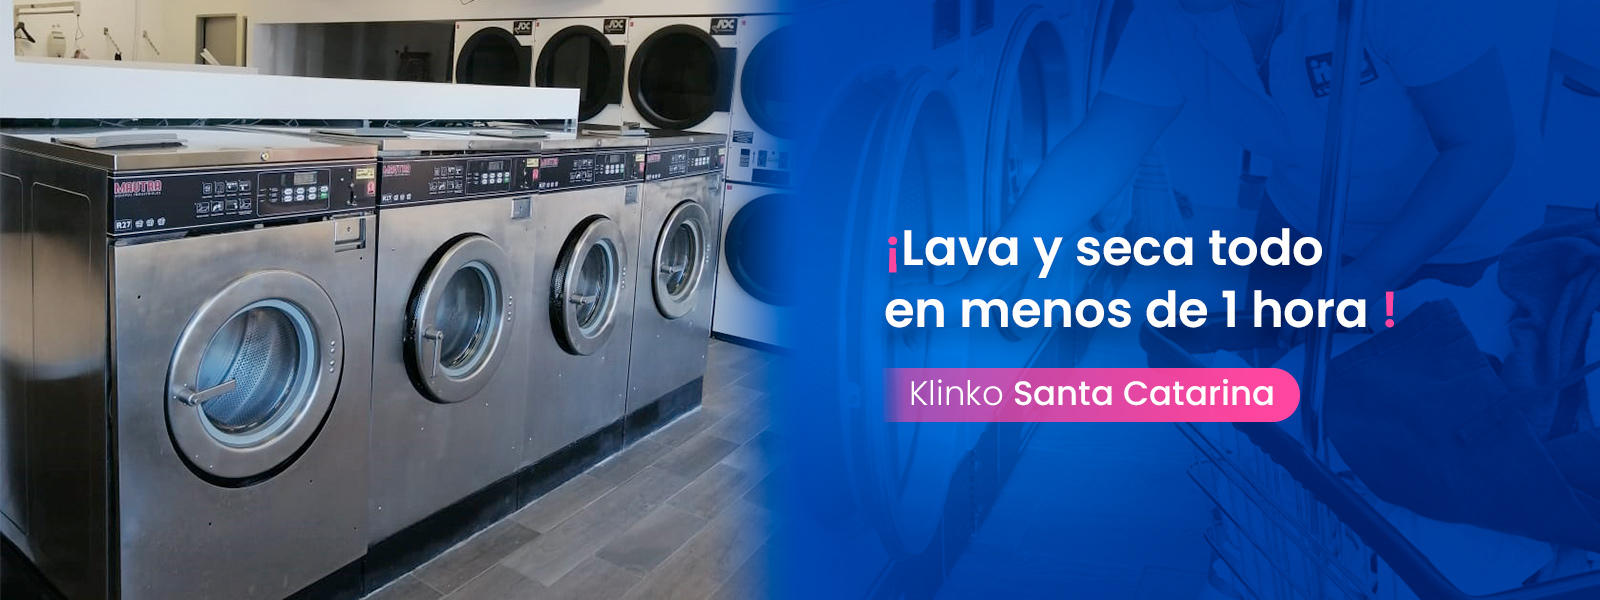 You are currently viewing Klinko Santa Catarina